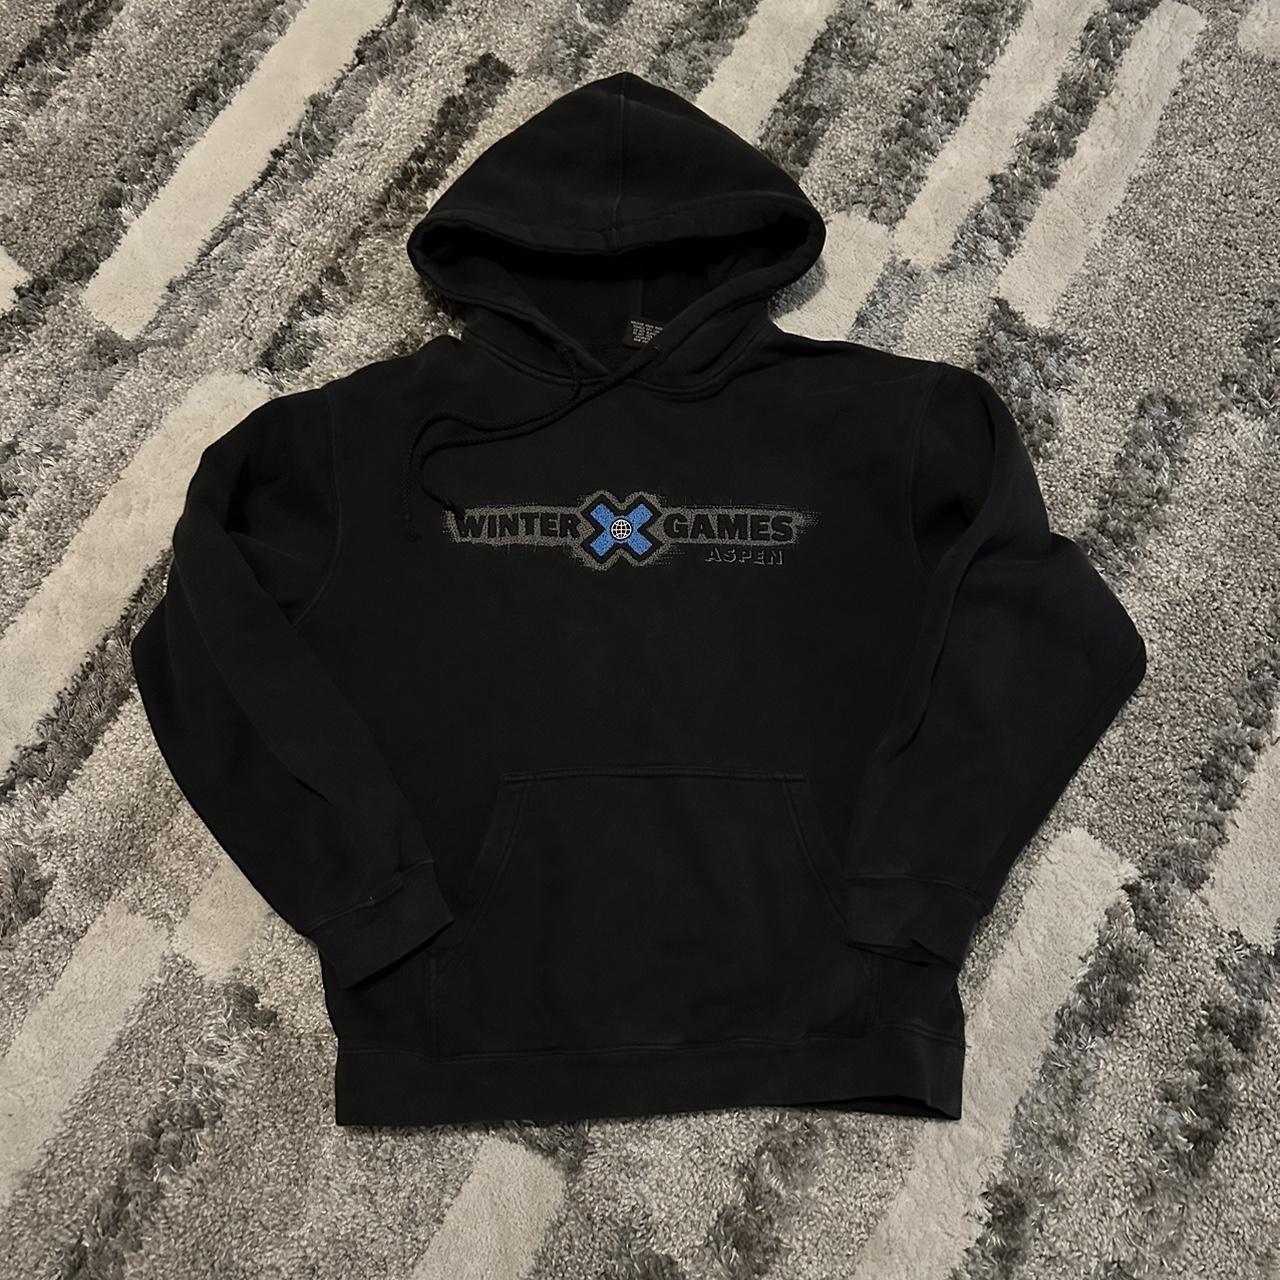 Y2k x games aspen hoodie. Embroidered logo. Size... - Depop